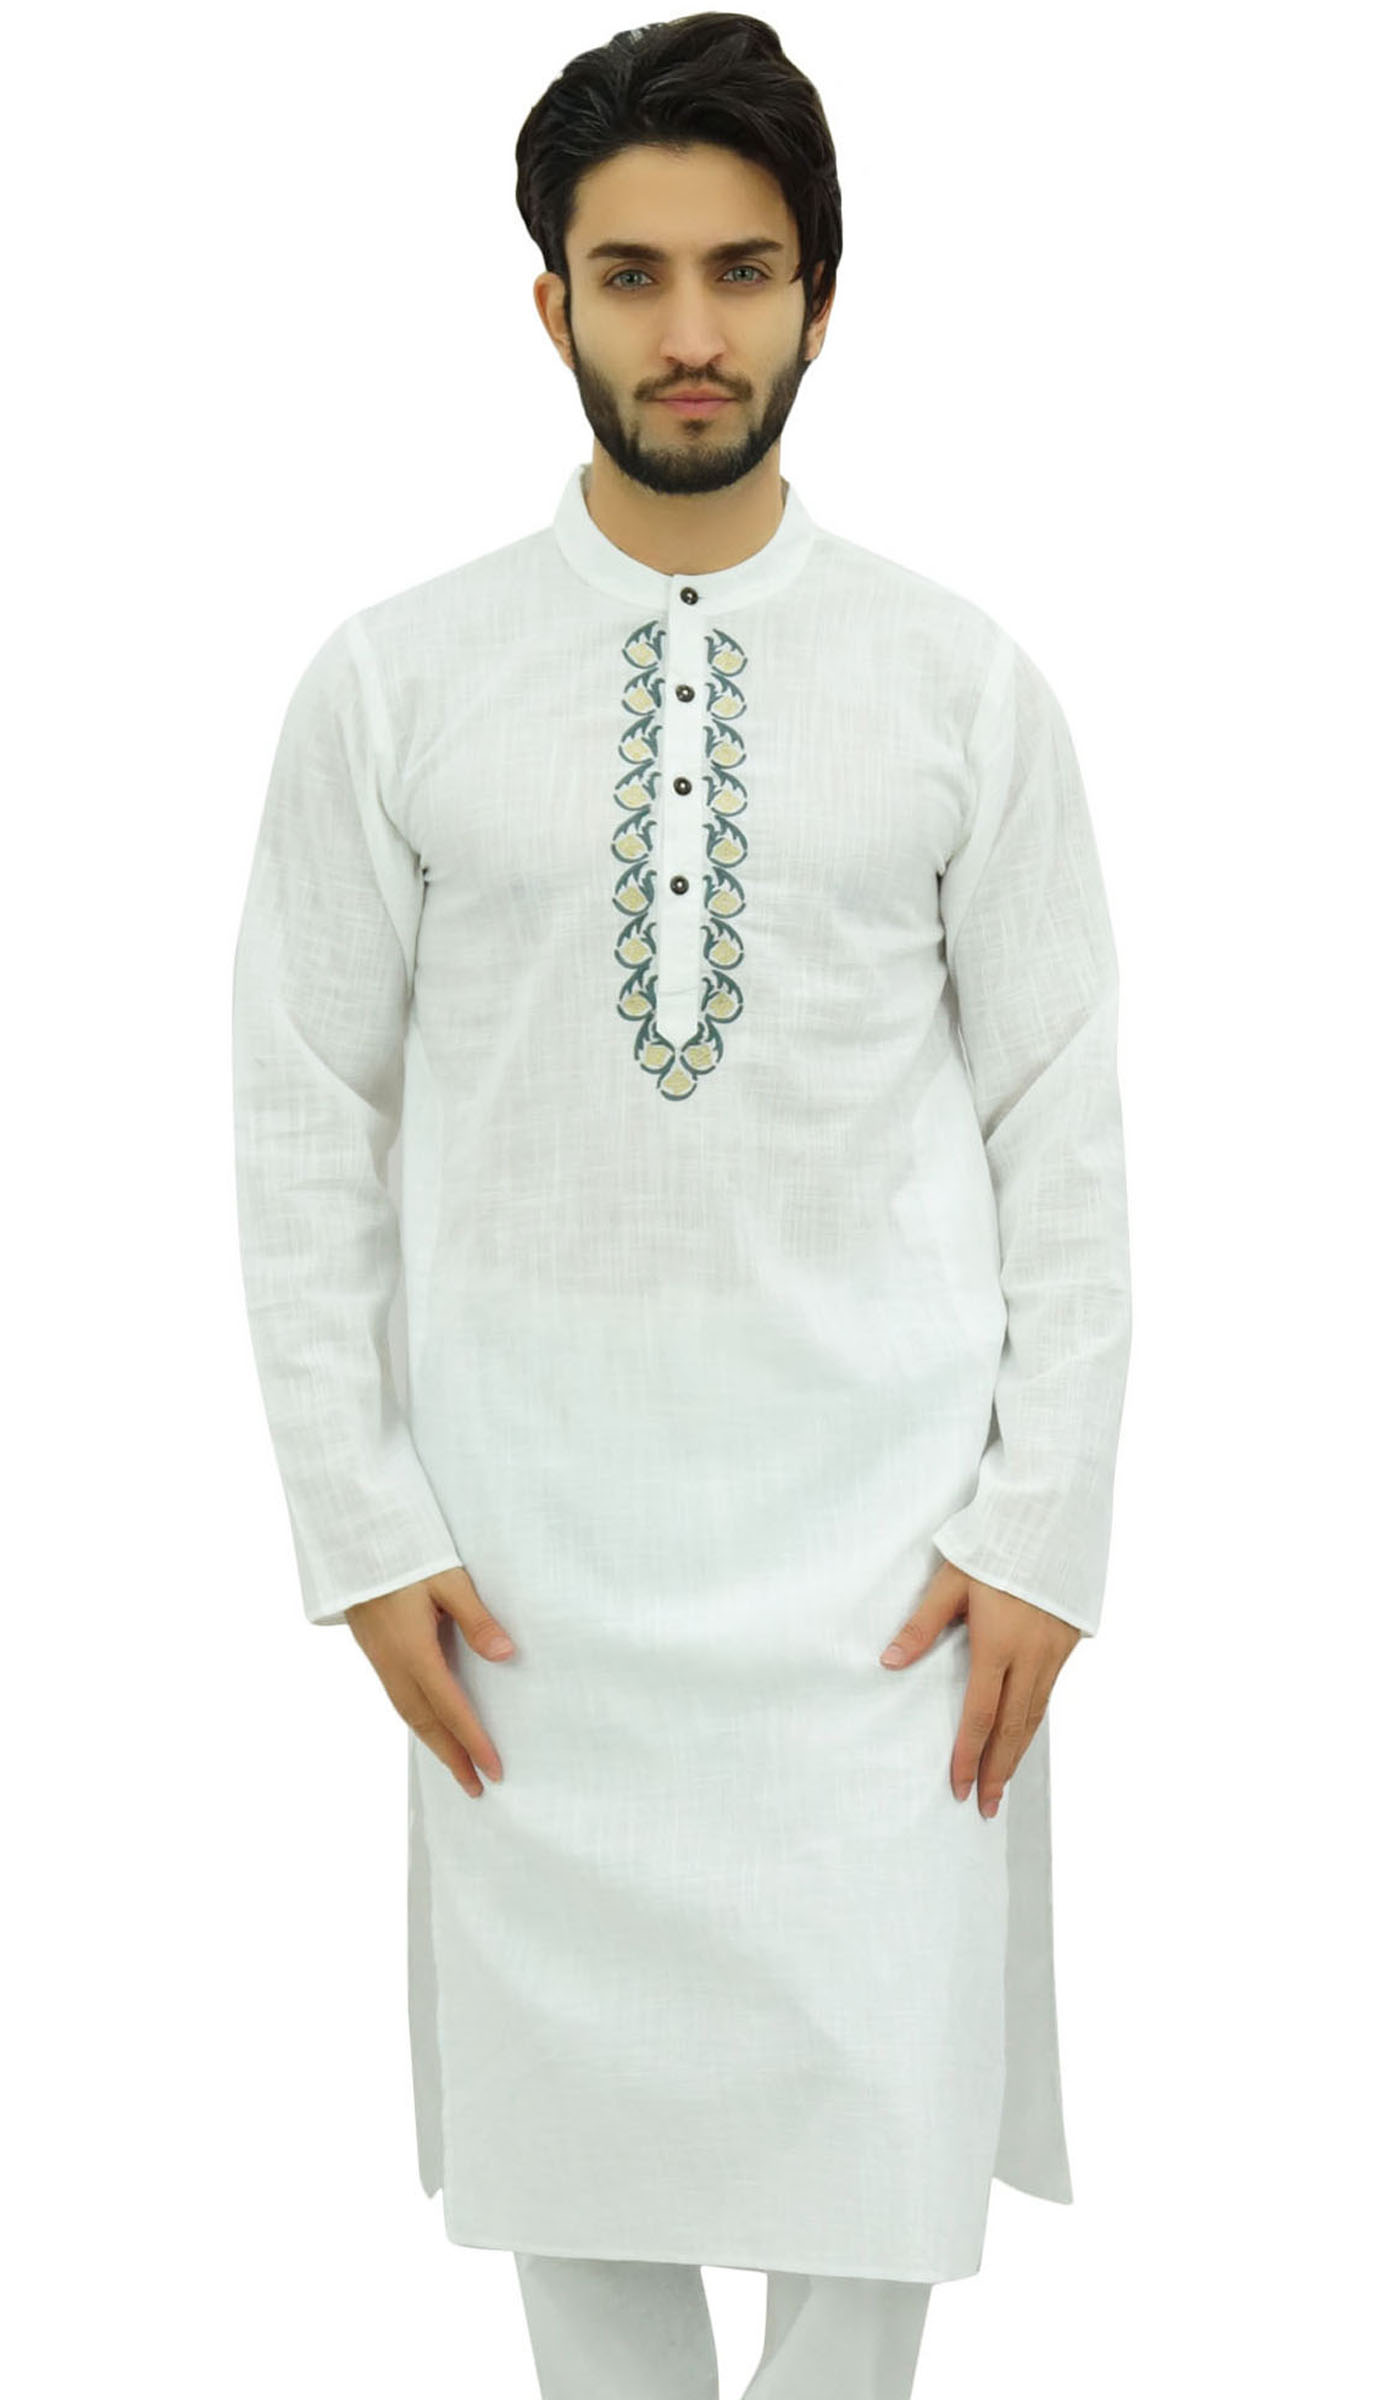 Indian Traditional Kurta Top Tunic Men'S Dress Any Ocassion Wear Shirts Kurtas 